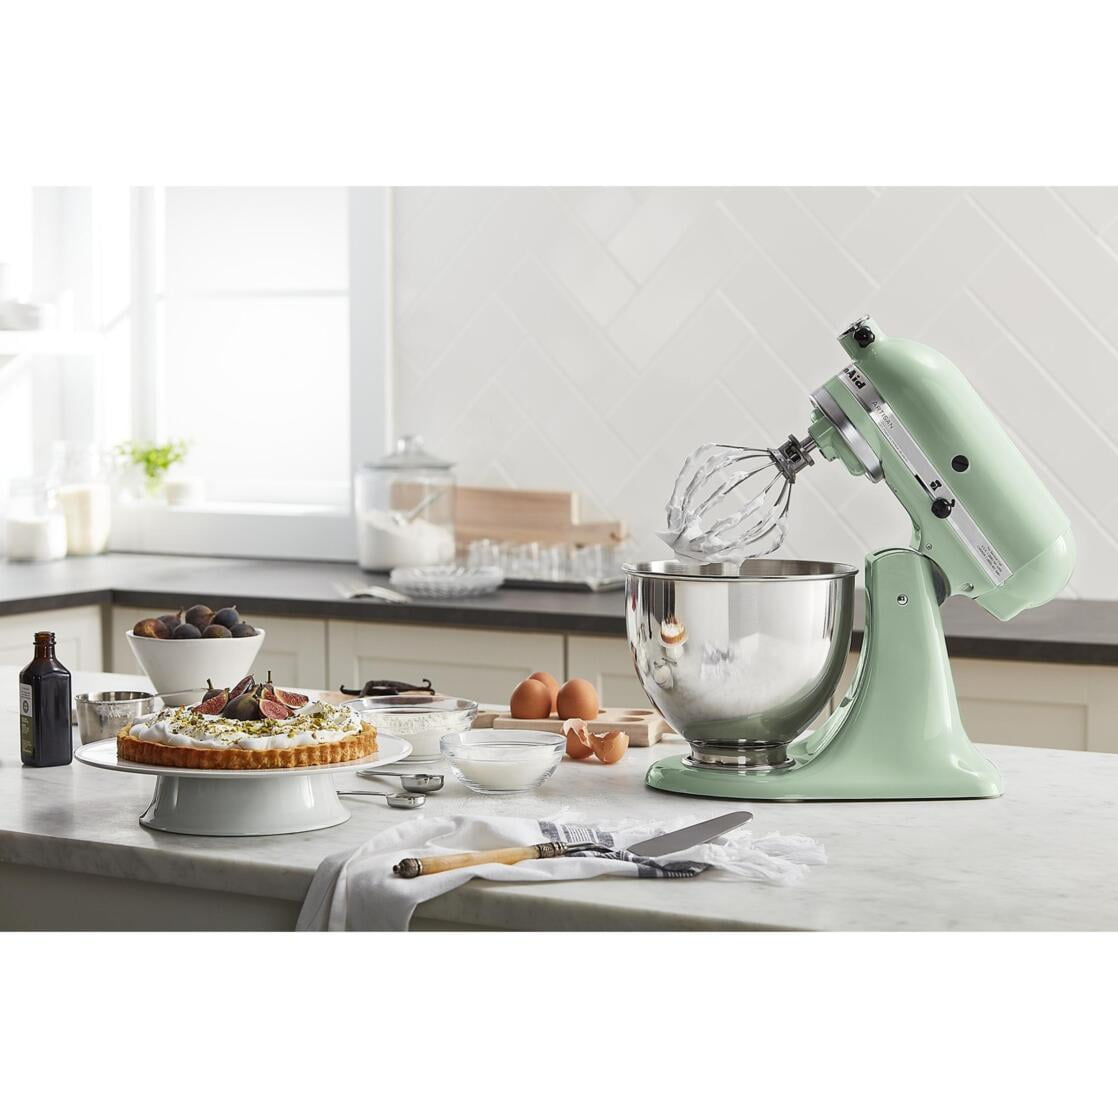 KitchenAid® Artisan® Design Series 5 Quart Tilt-Head Stand Mixer